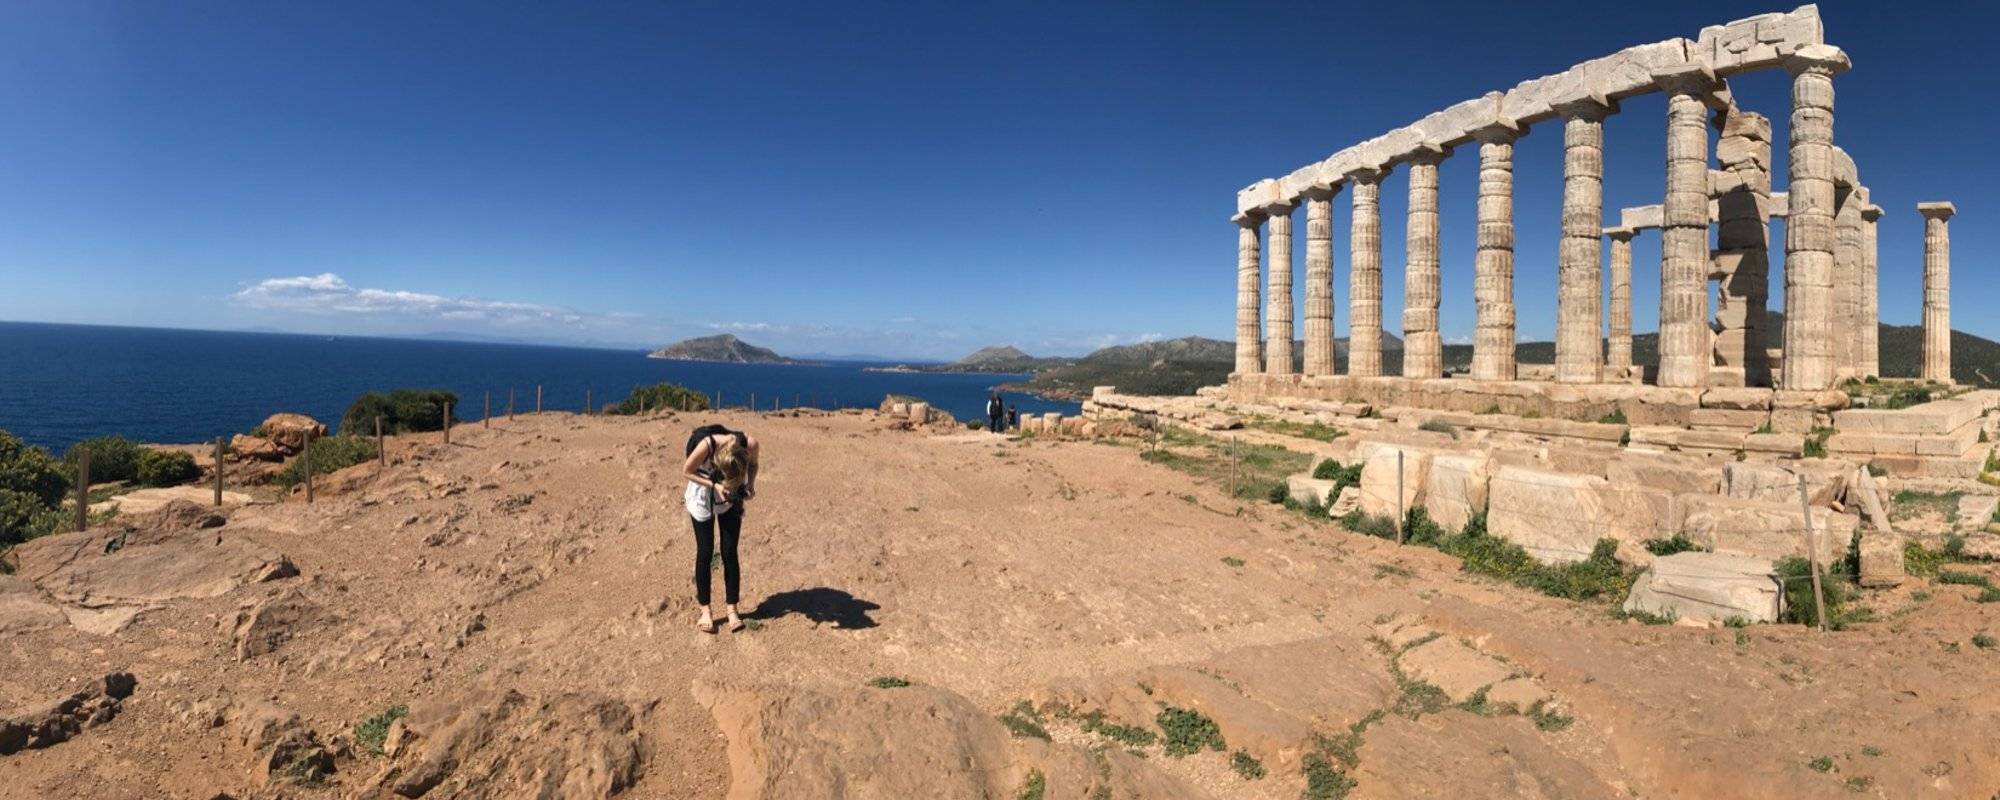 Travels in Greece: Temple of Poseidon - Cape Sounion, Greece 